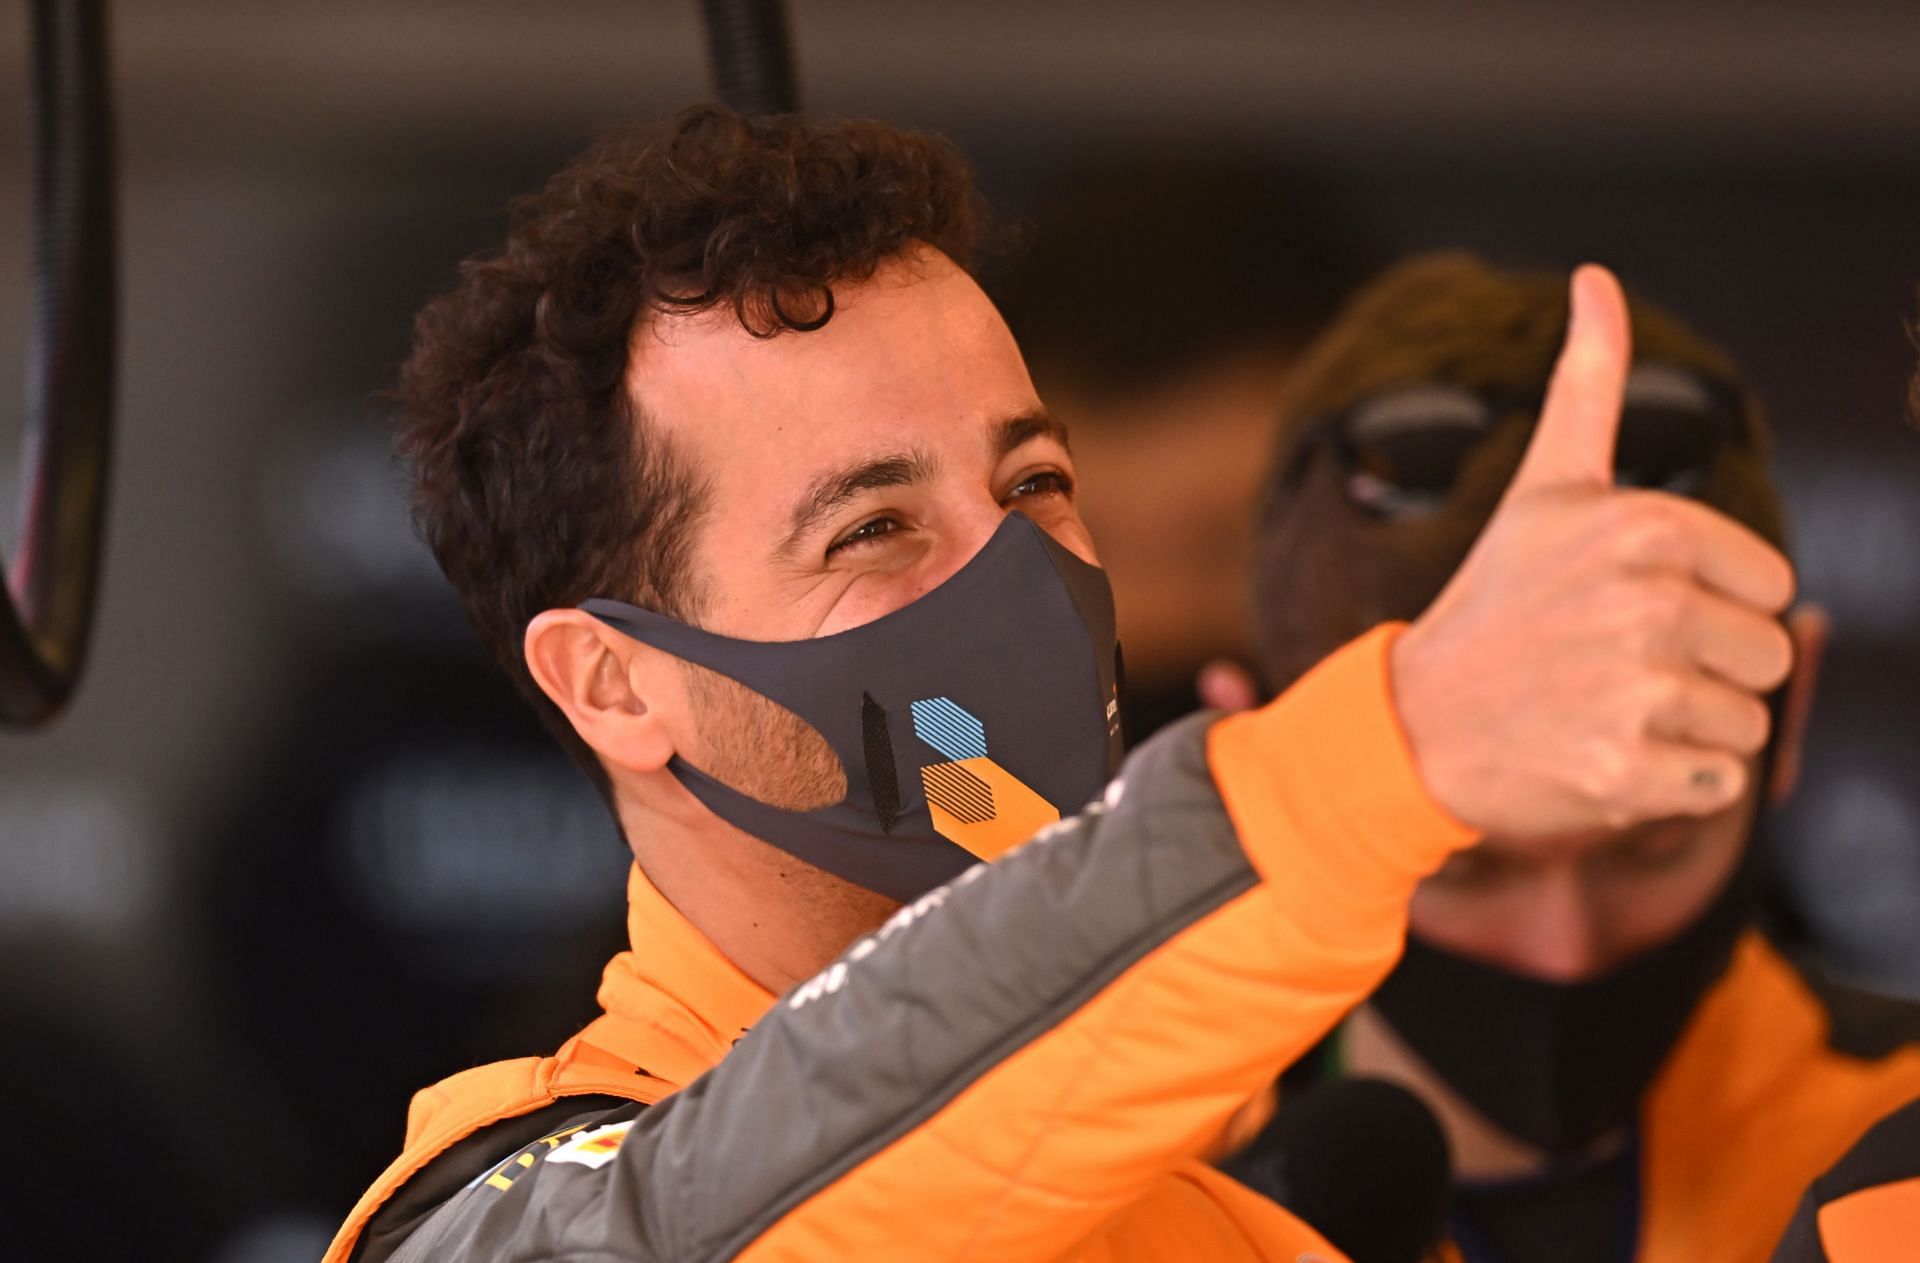 Daniel Ricciardo during the F1 Grand Prix of Bahrain - Previews